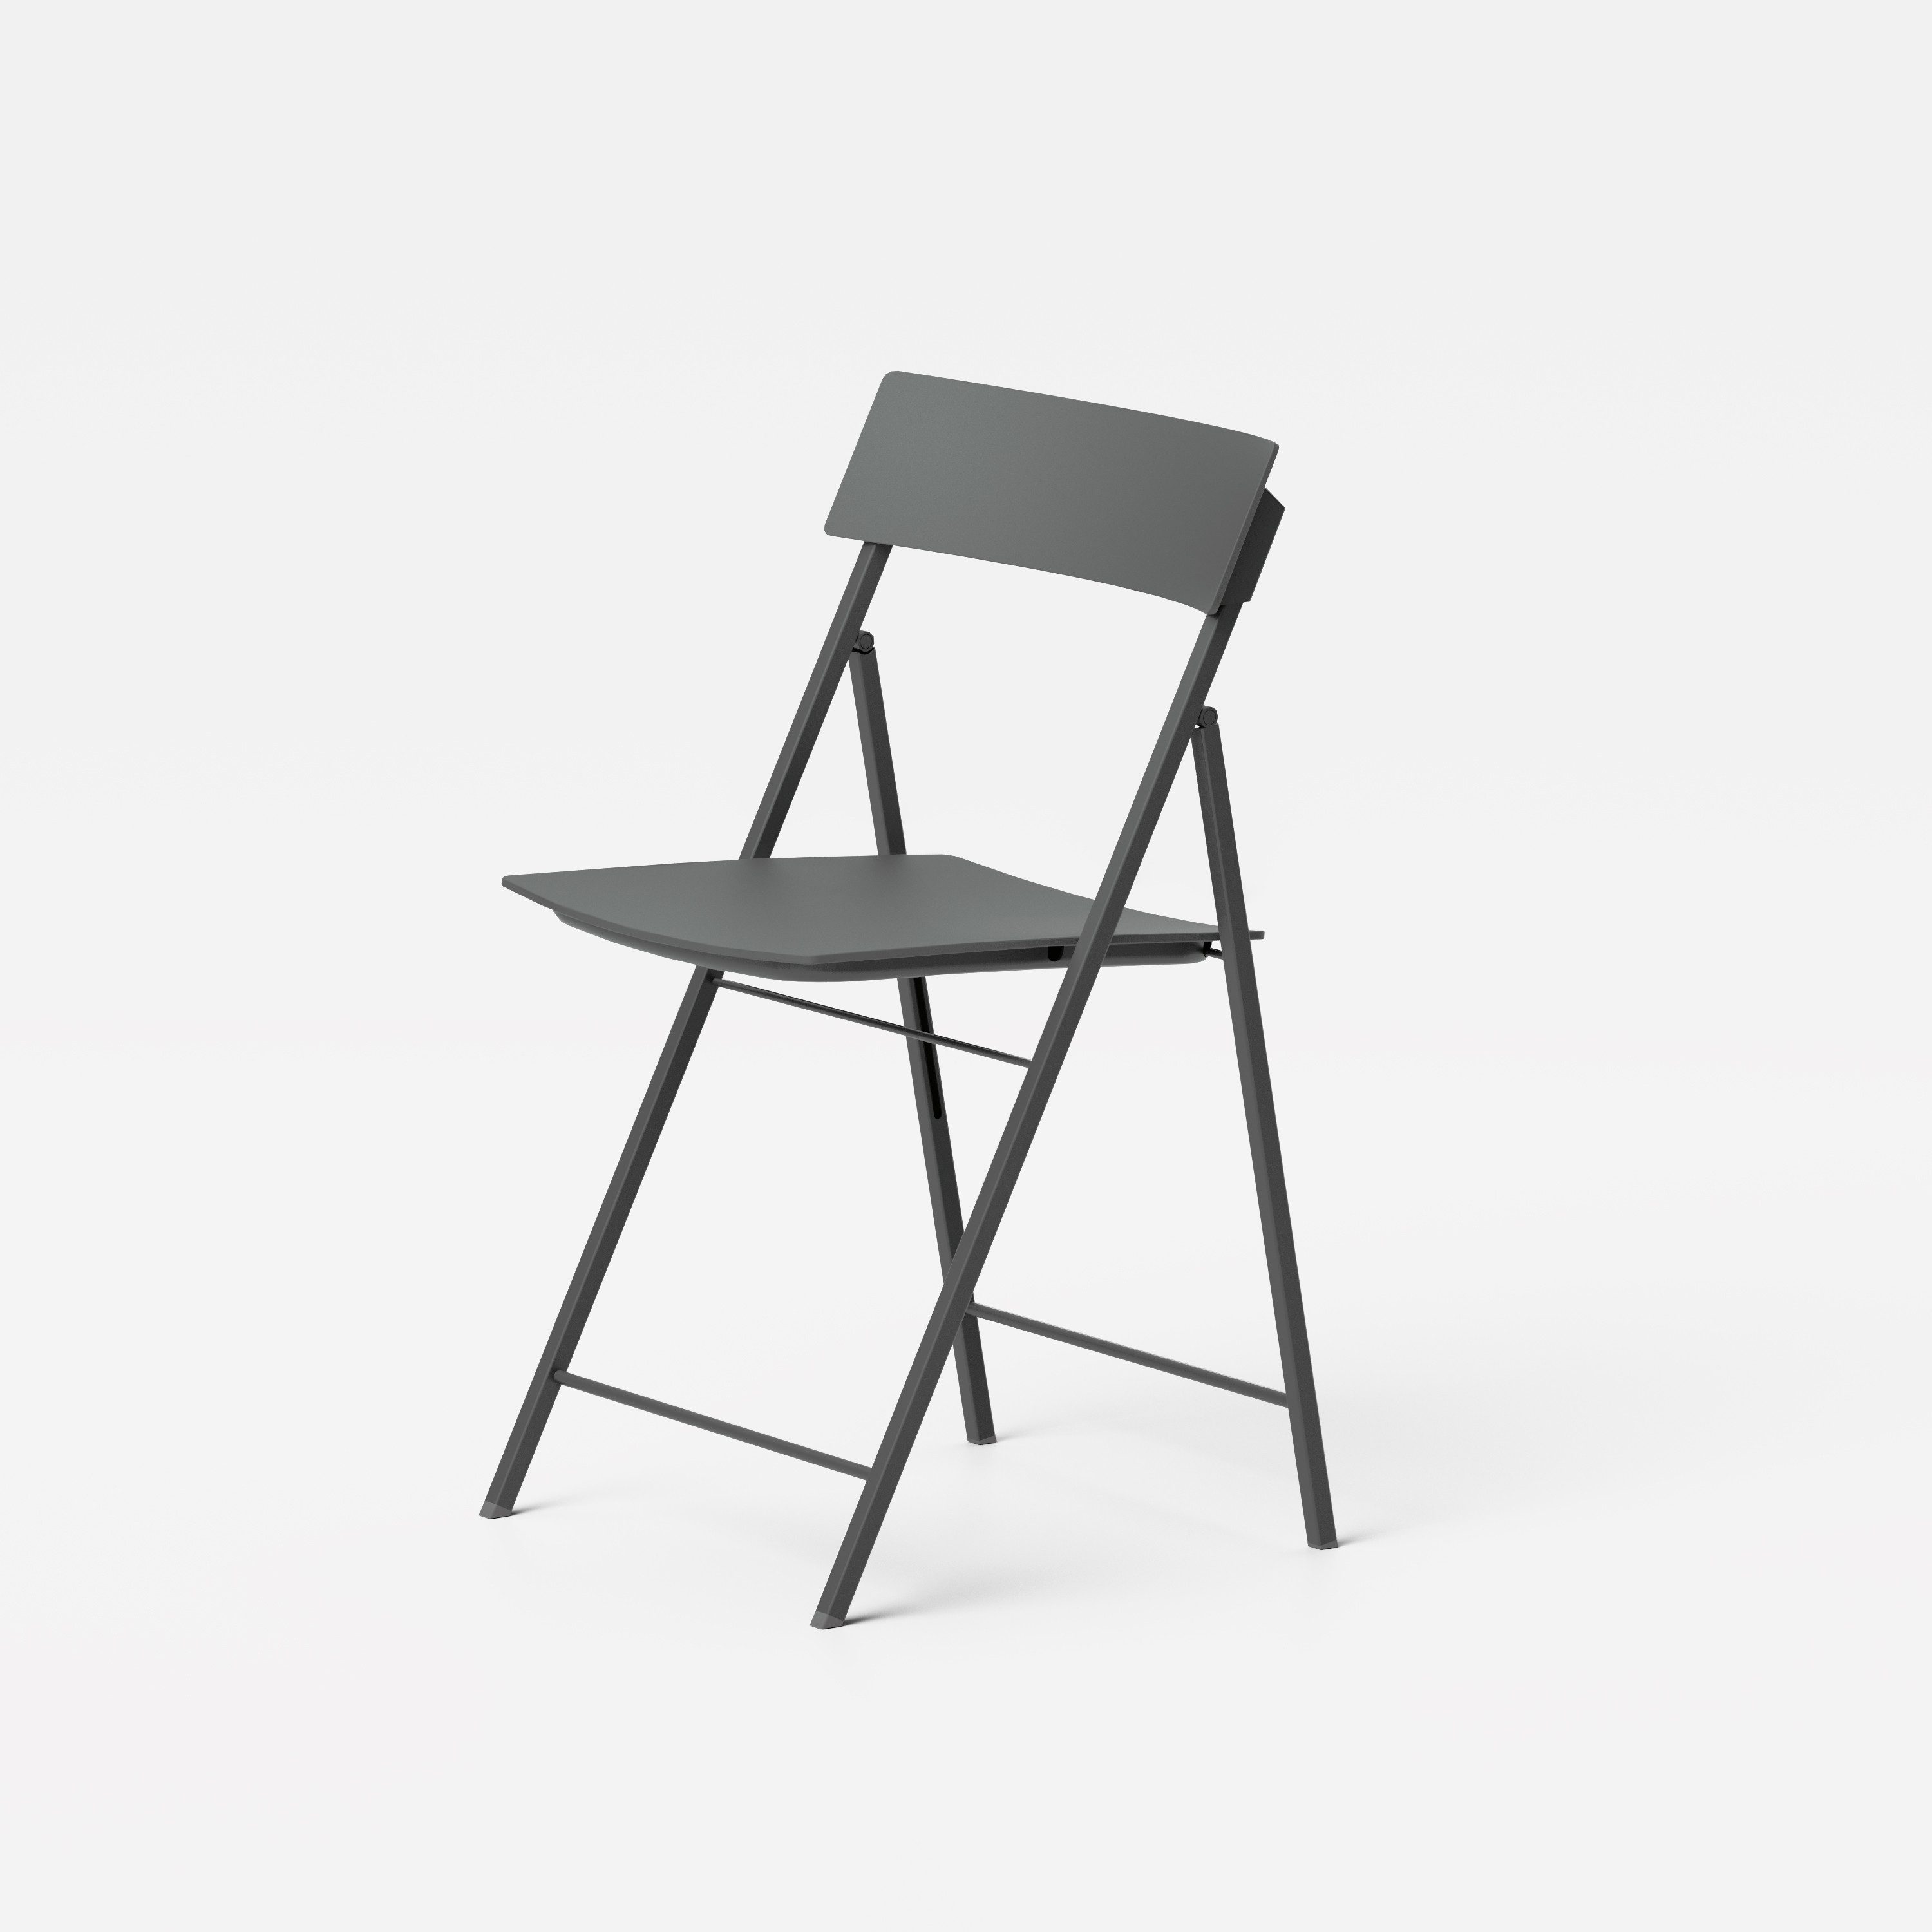 moebel-dich-auf Klappstuhl PEPPER (Design-Klappstuhl Faltbarer Stuhl Gastronomieklappstuhl Caféklappstuhl), Struktur aus lackiertem Stahl